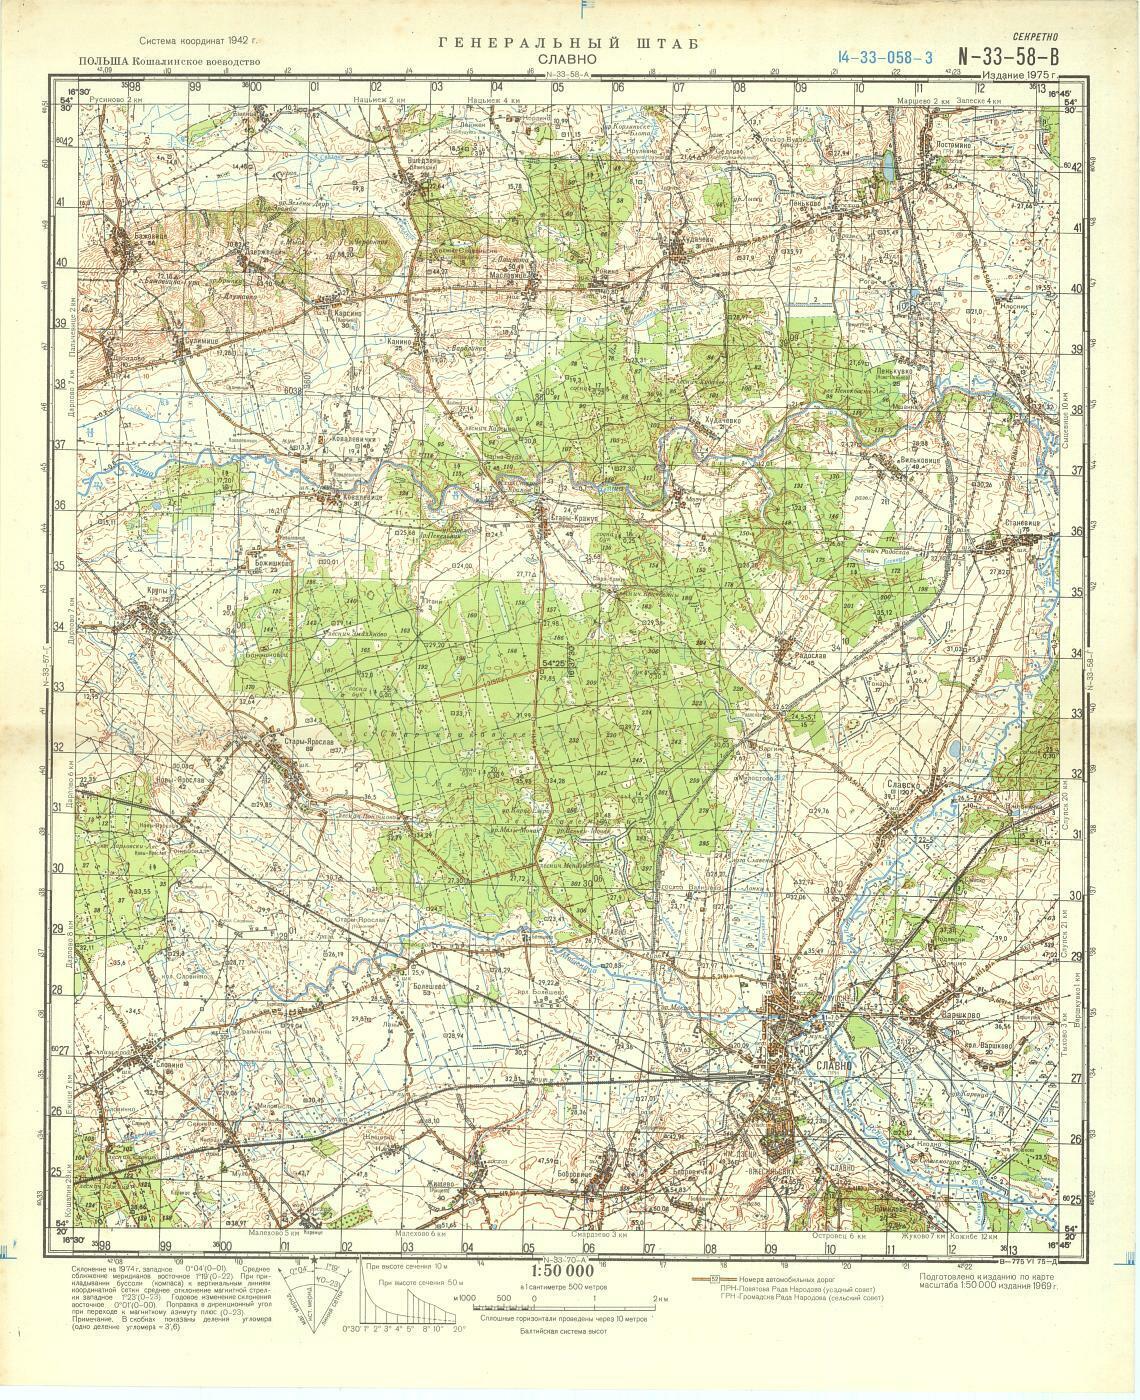 Russian Soviet Military Topographic Map – SLAWNO (Poland, Zach.-Pomor.), 1975